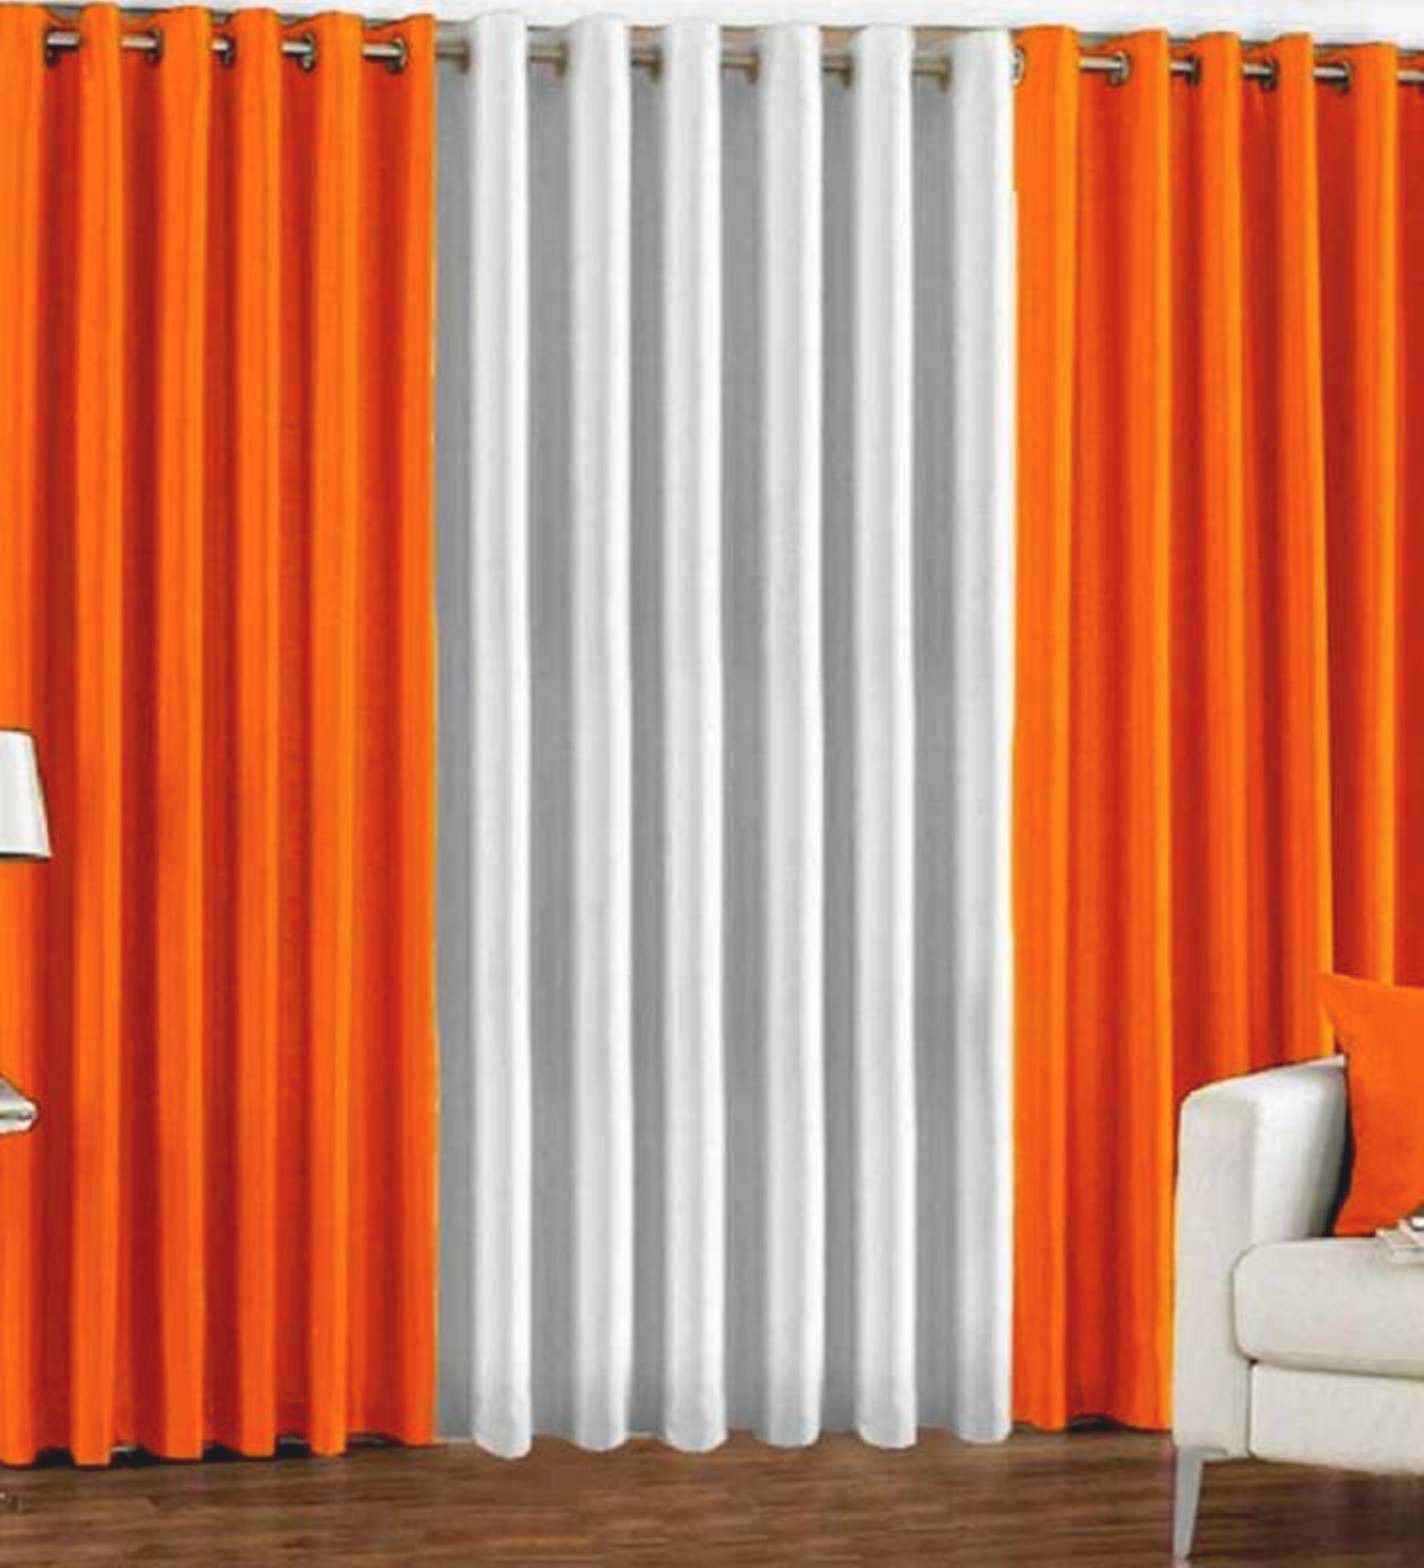     			BELLA TRUE Solid SemiTransparent Eyelet Curtain 9 ft ( Pack of 3 )  Orange